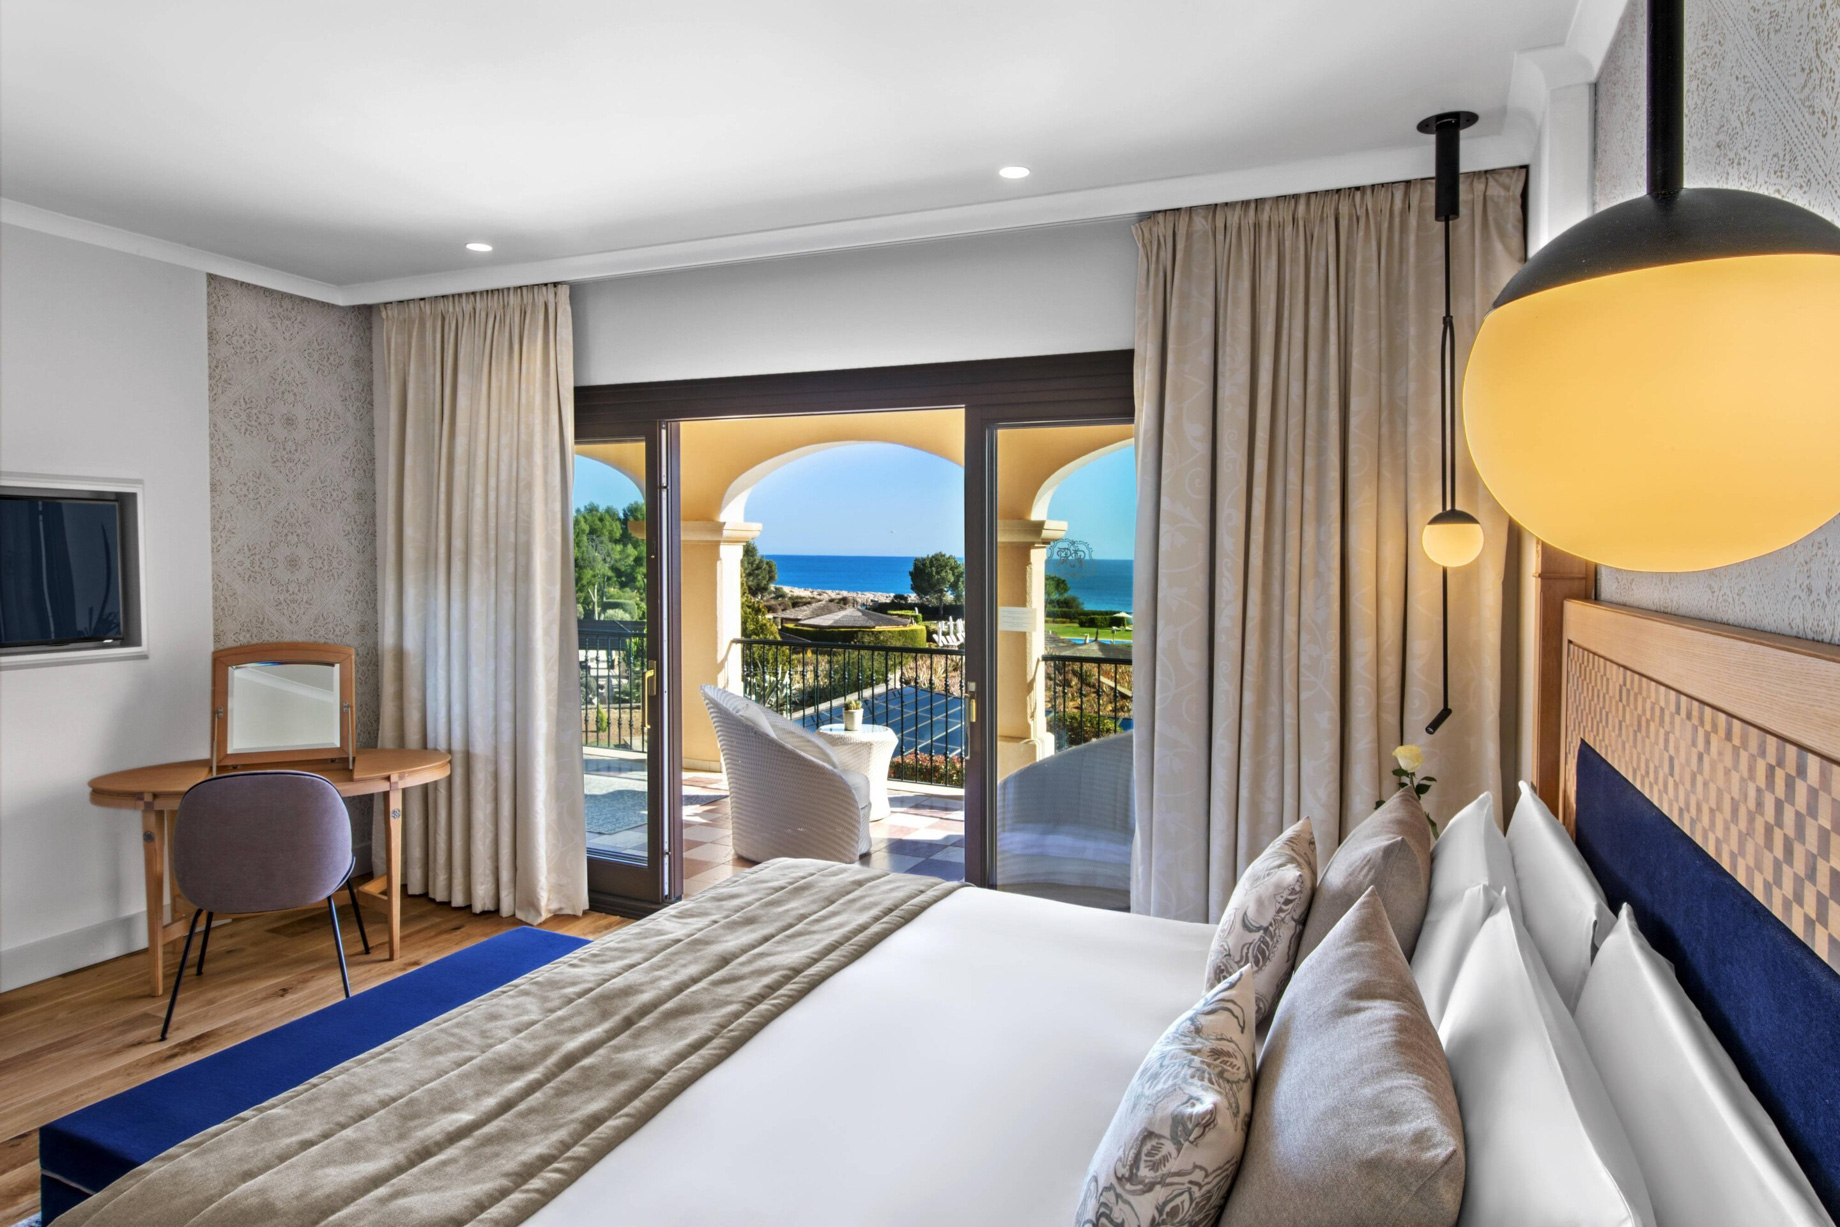 The St. Regis Mardavall Mallorca Resort - Palma de Mallorca, Spain - Ocean Two Suite Bedroom View